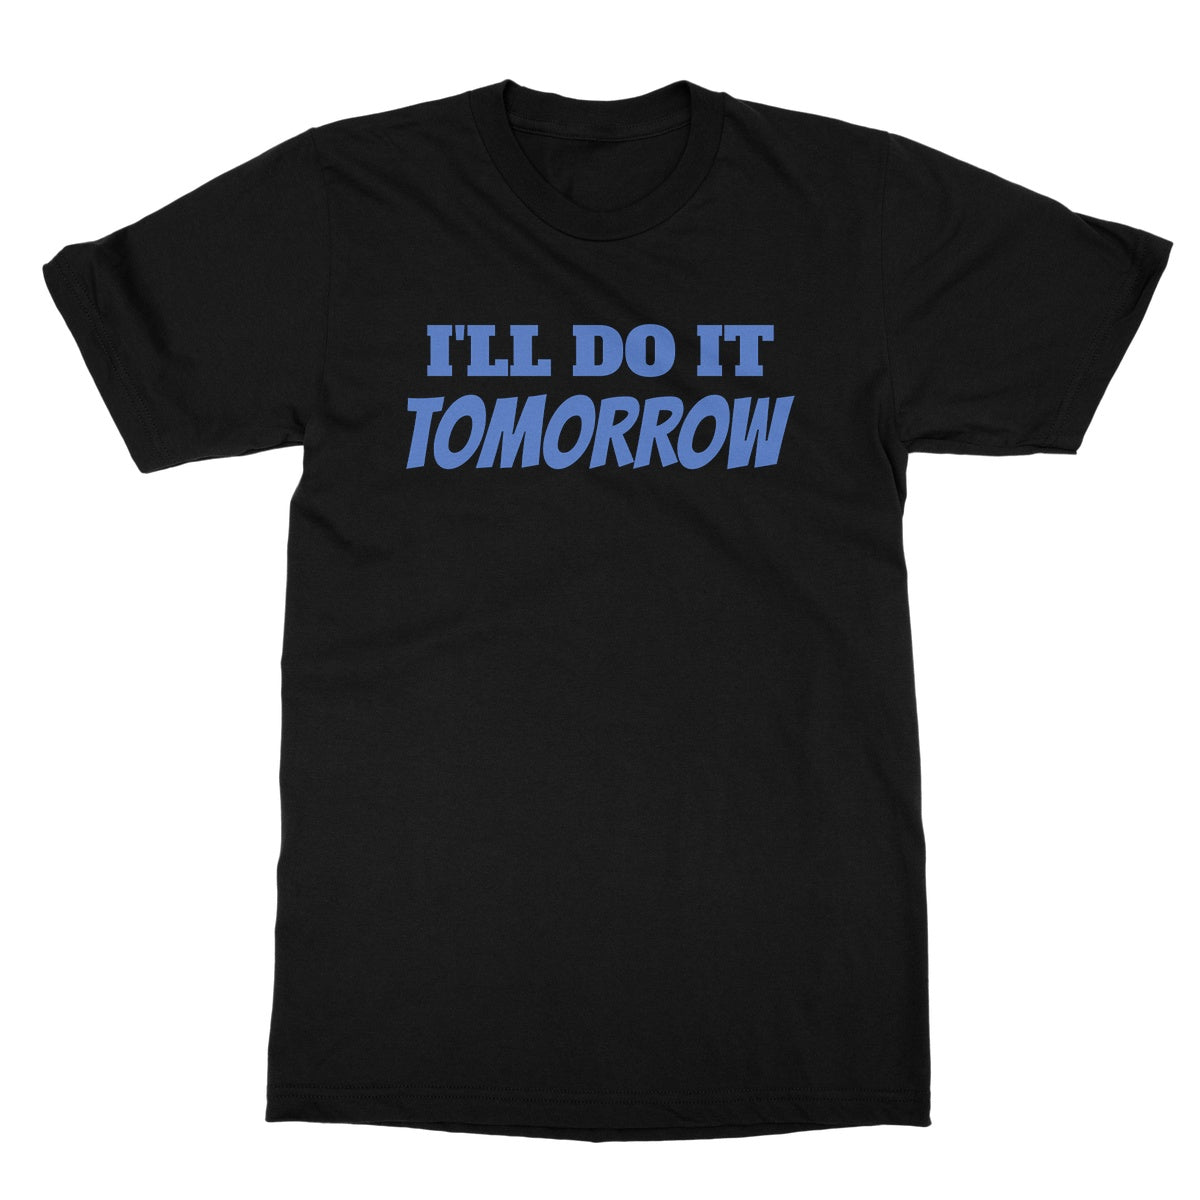 Ill do it tomorrow t shirt black